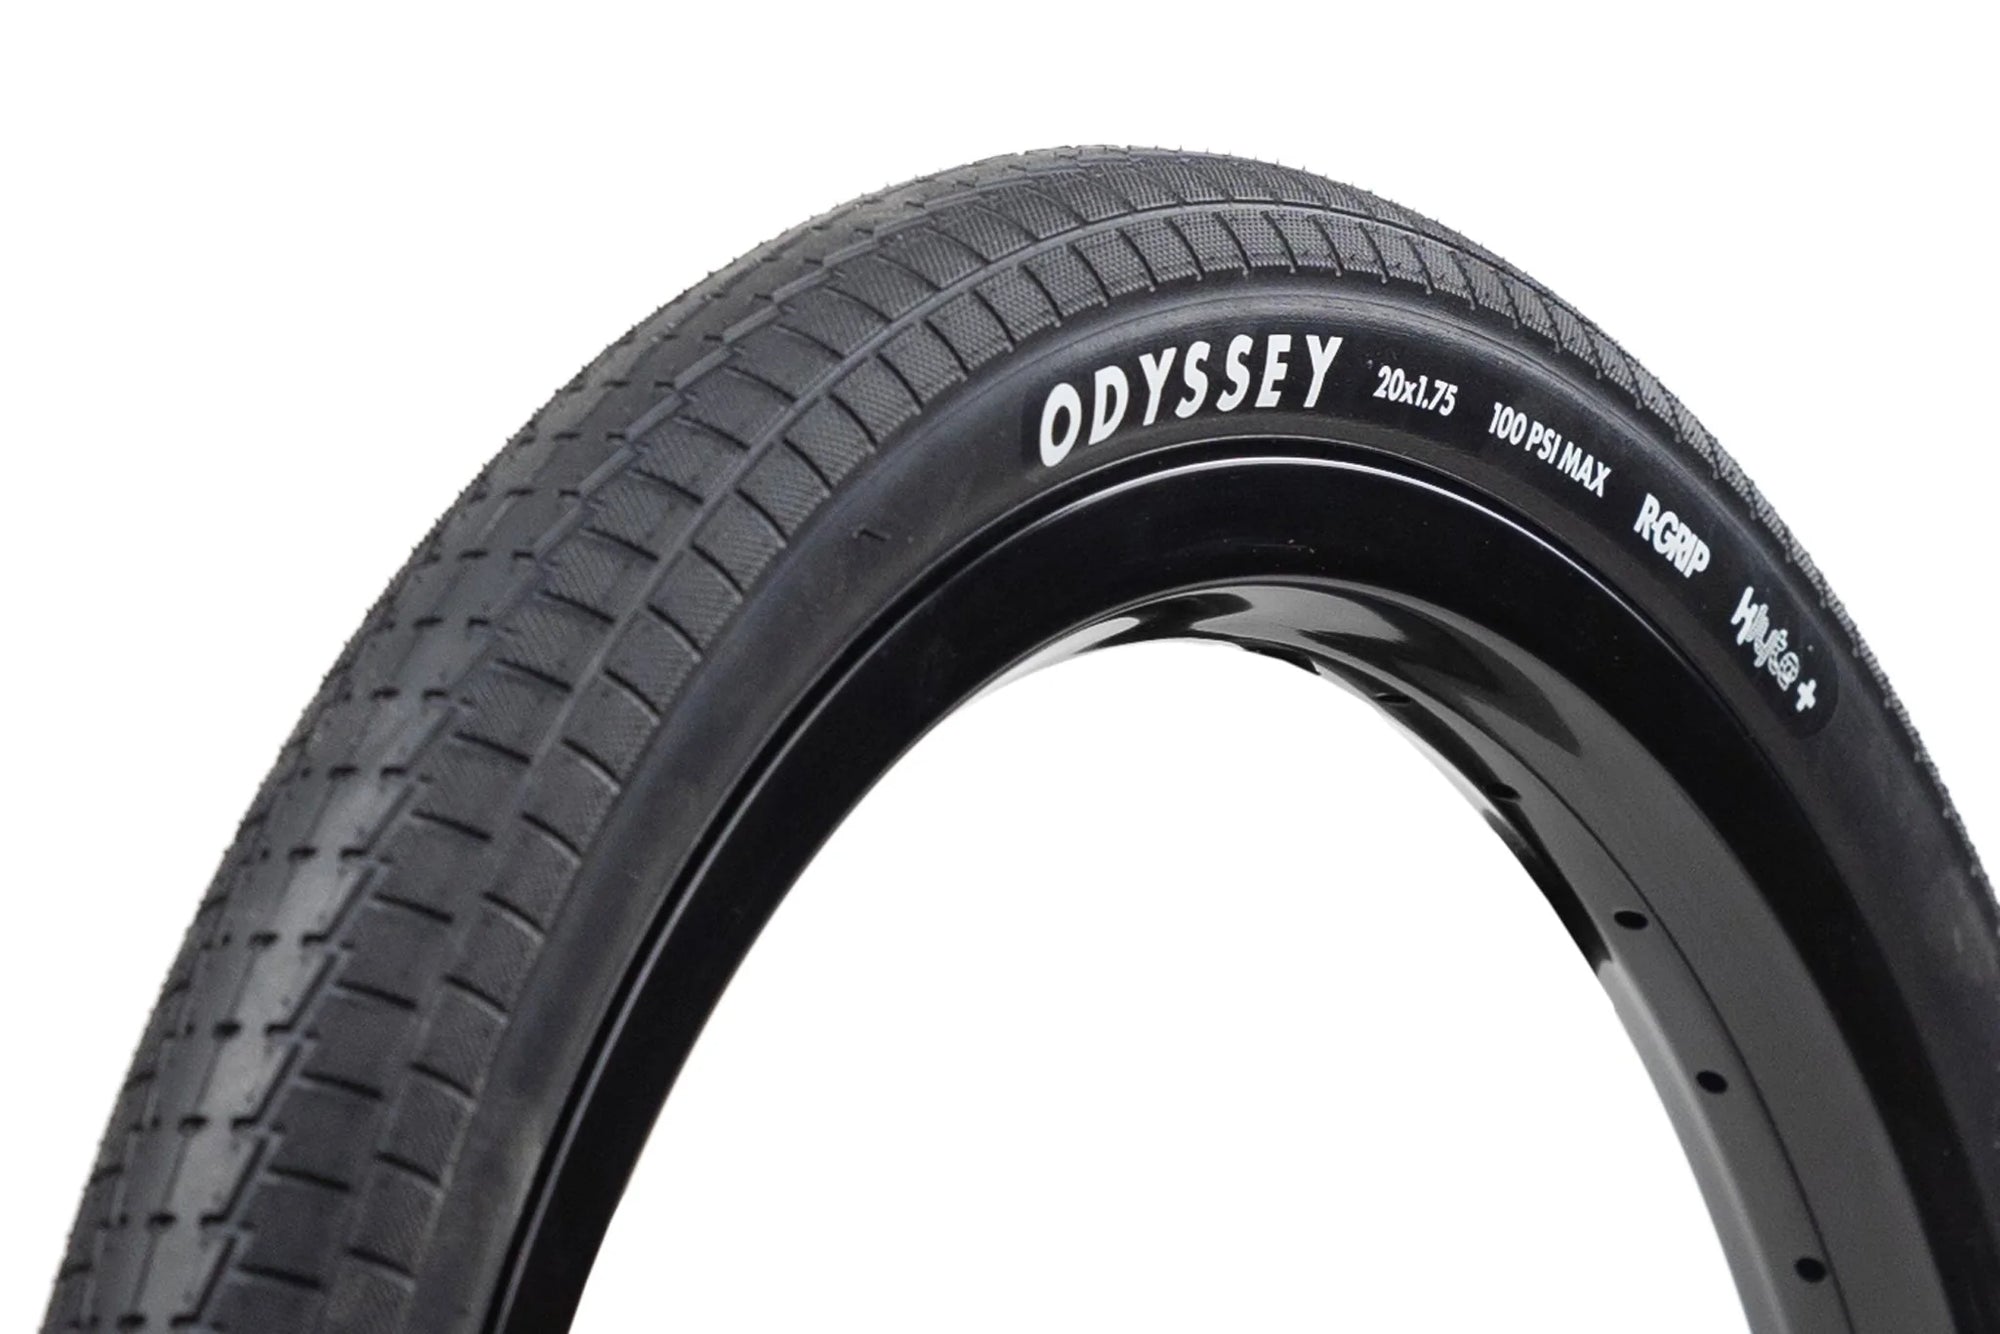 20x1.75 Odyssey Super Circuit Folding BMX Tire - 110psi - Black